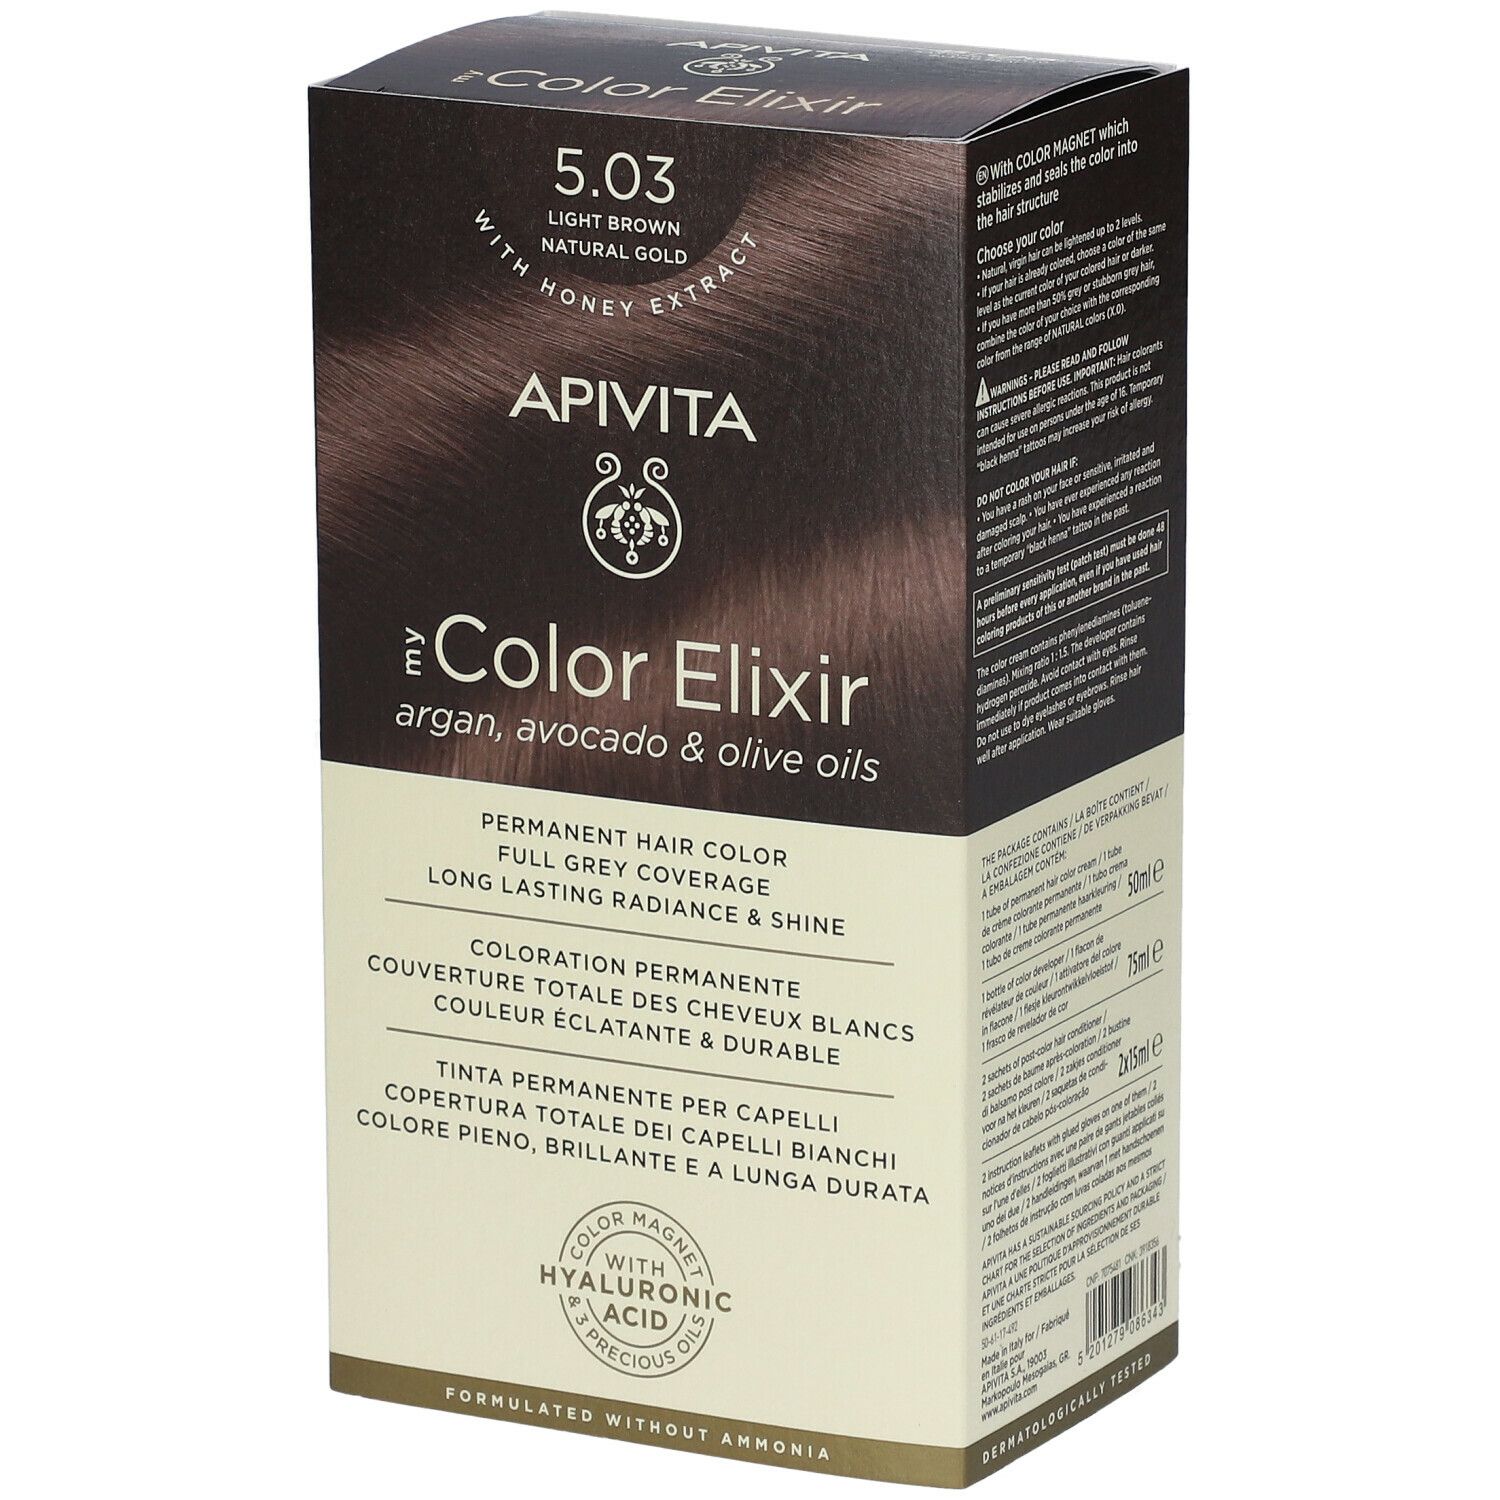 Apivita My Color Elixir 5.03 Marron claire Natürliches Gold